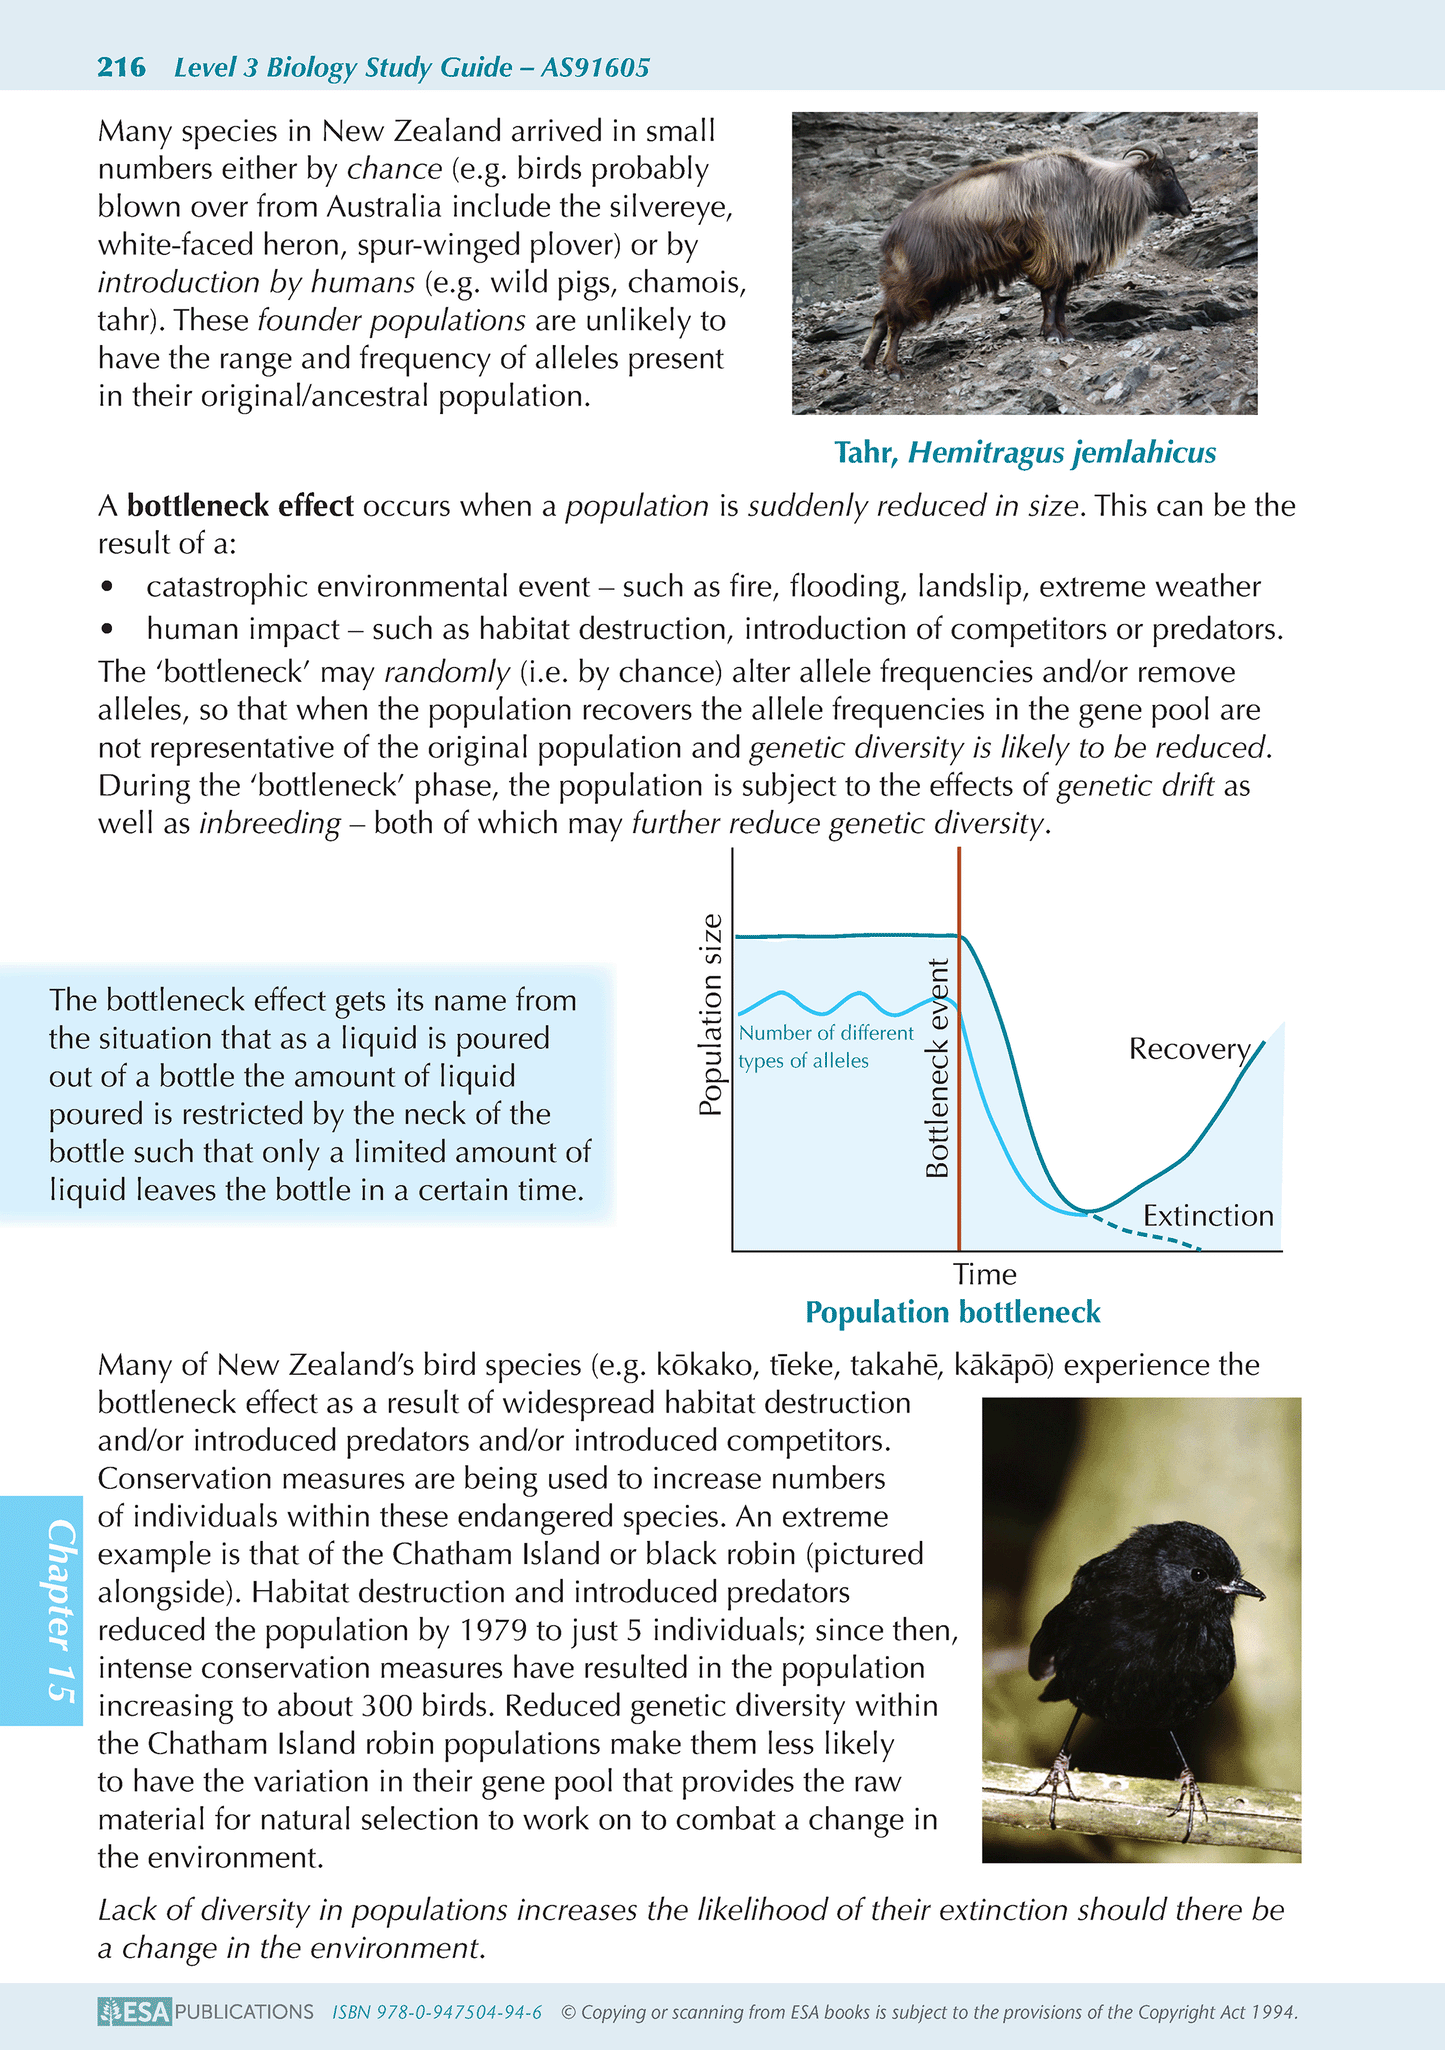 Level 3 Biology ESA Study Guide